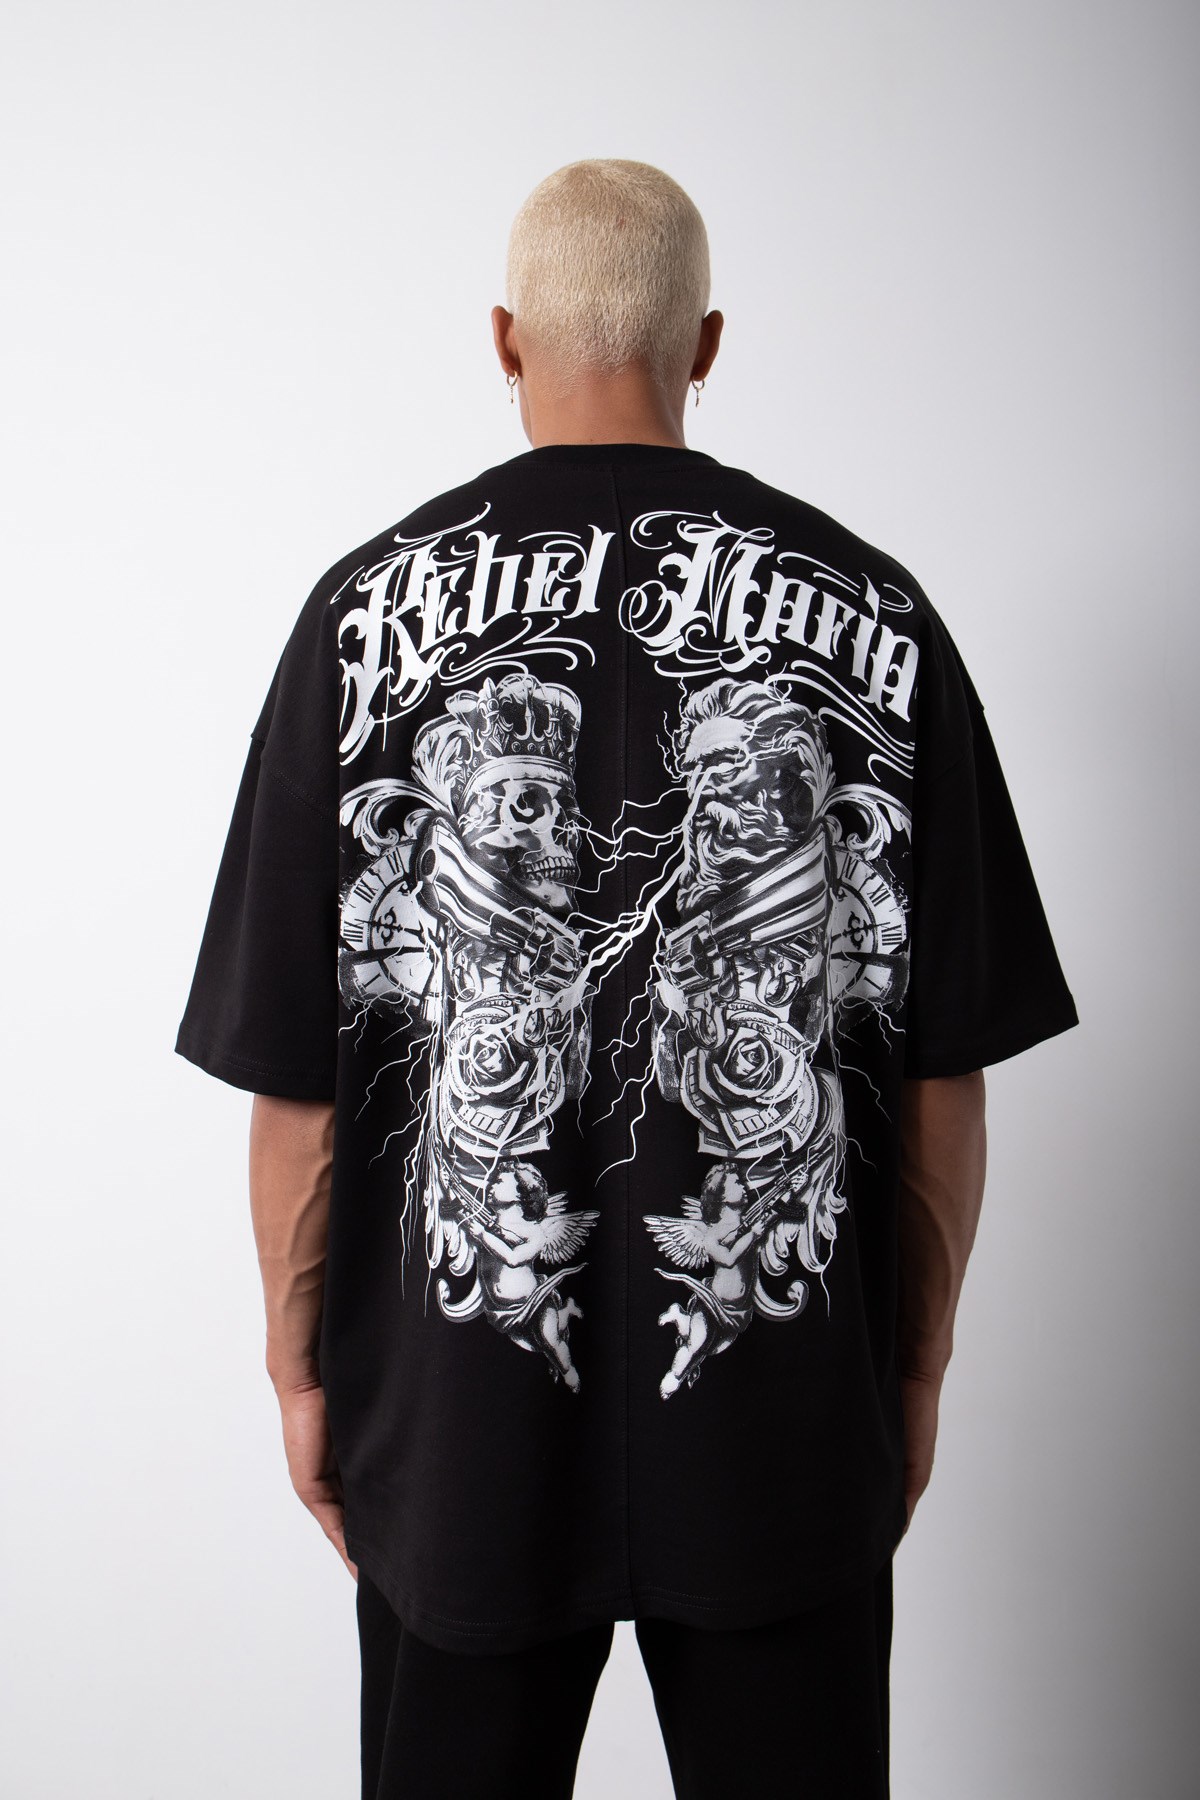 Paranafloden gentage Manøvre Oversize Rebel Mafia Printed Organic Cotton T-Shirt Black